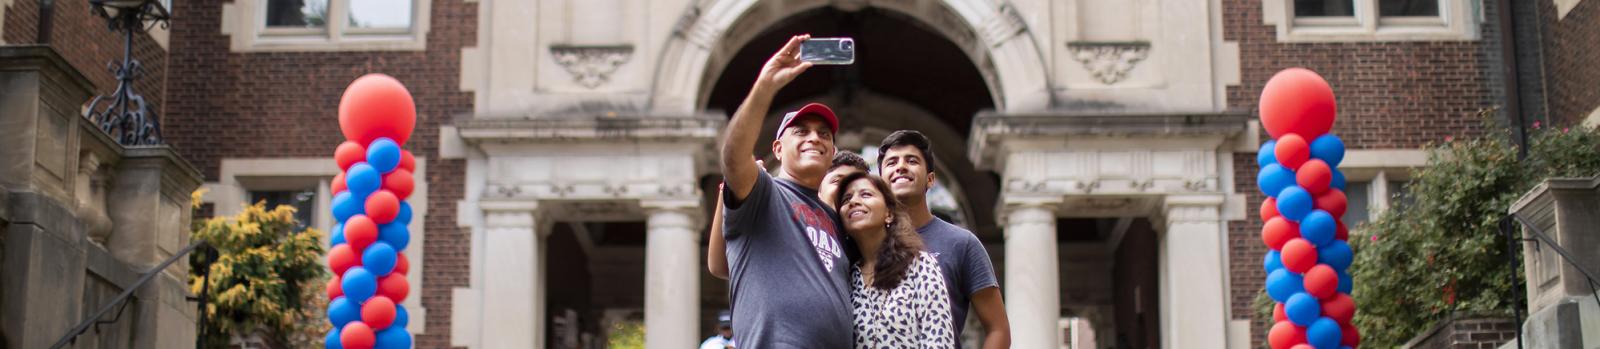 A family taking a selfie at Penn